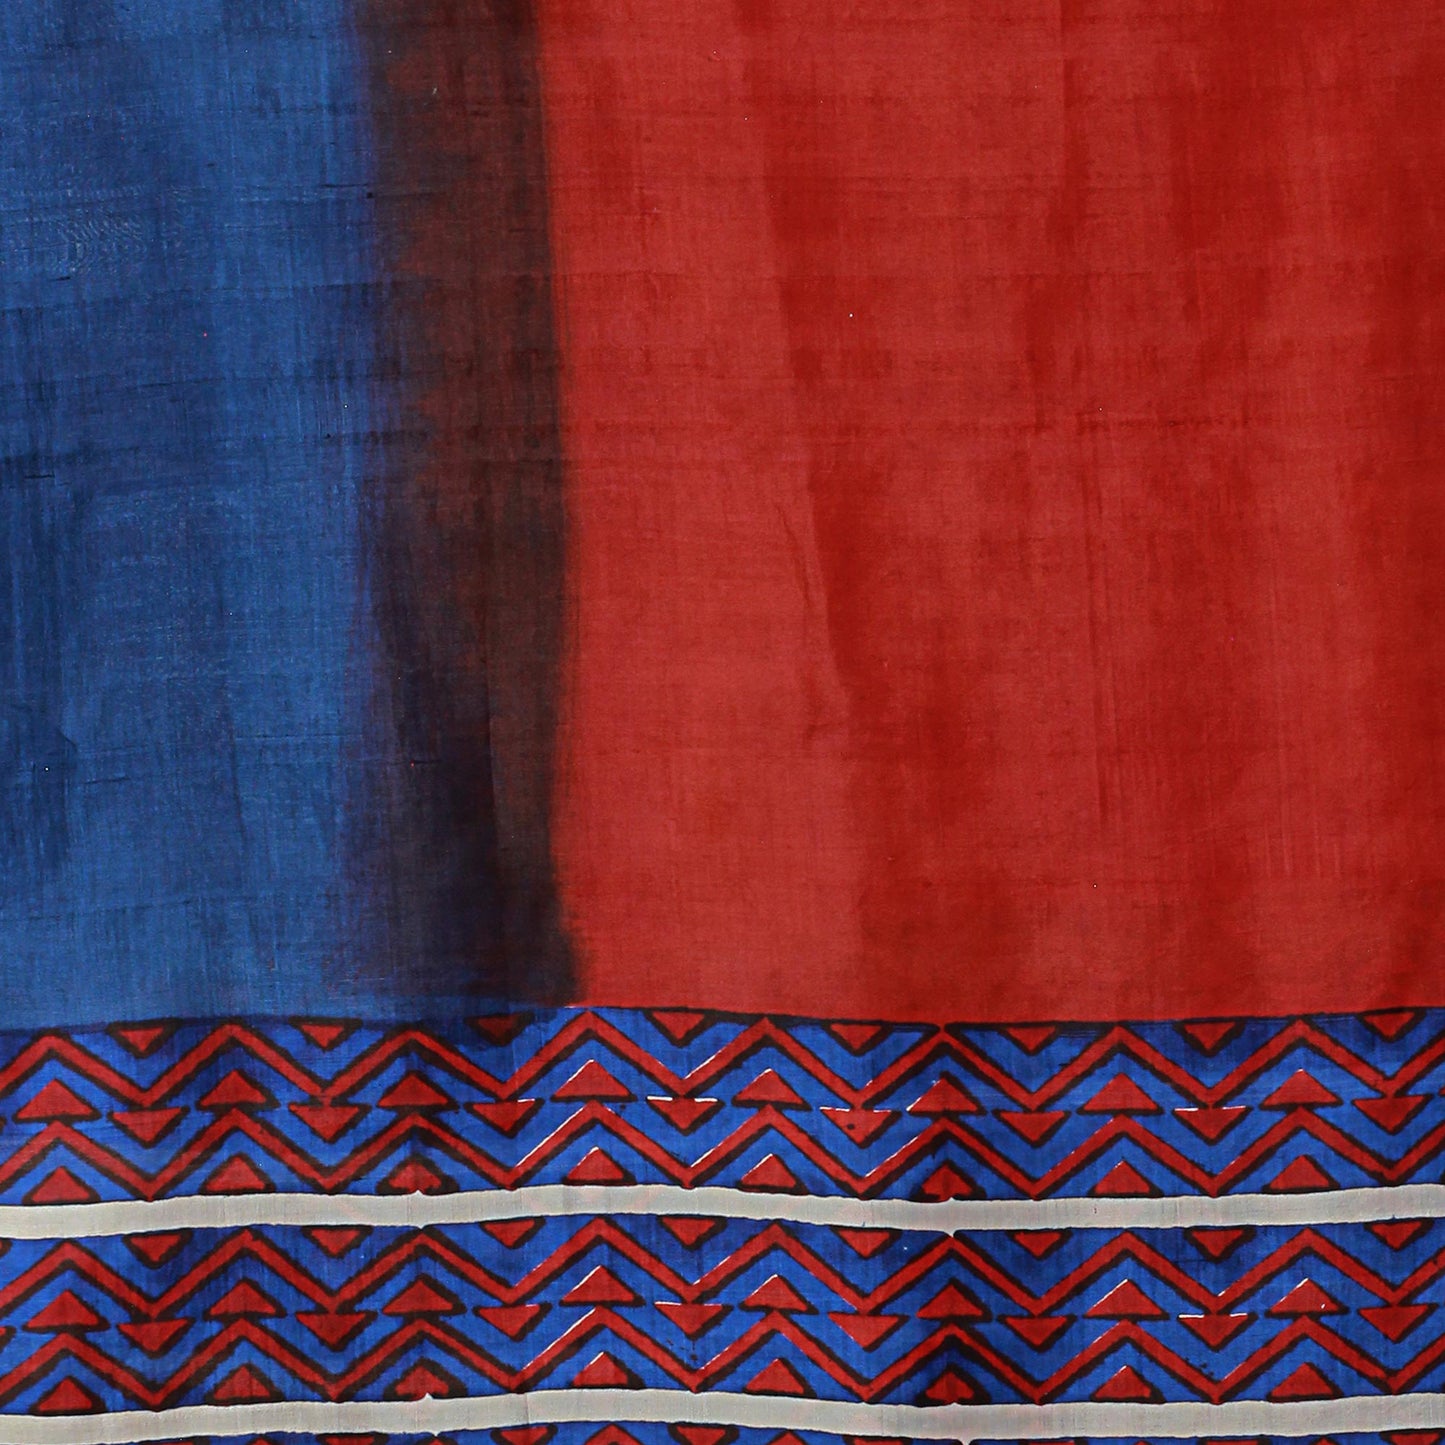 Bengali Festival in Cinnabar Hand Woven Cinnabar Azure Geometric Silk Shawl from India